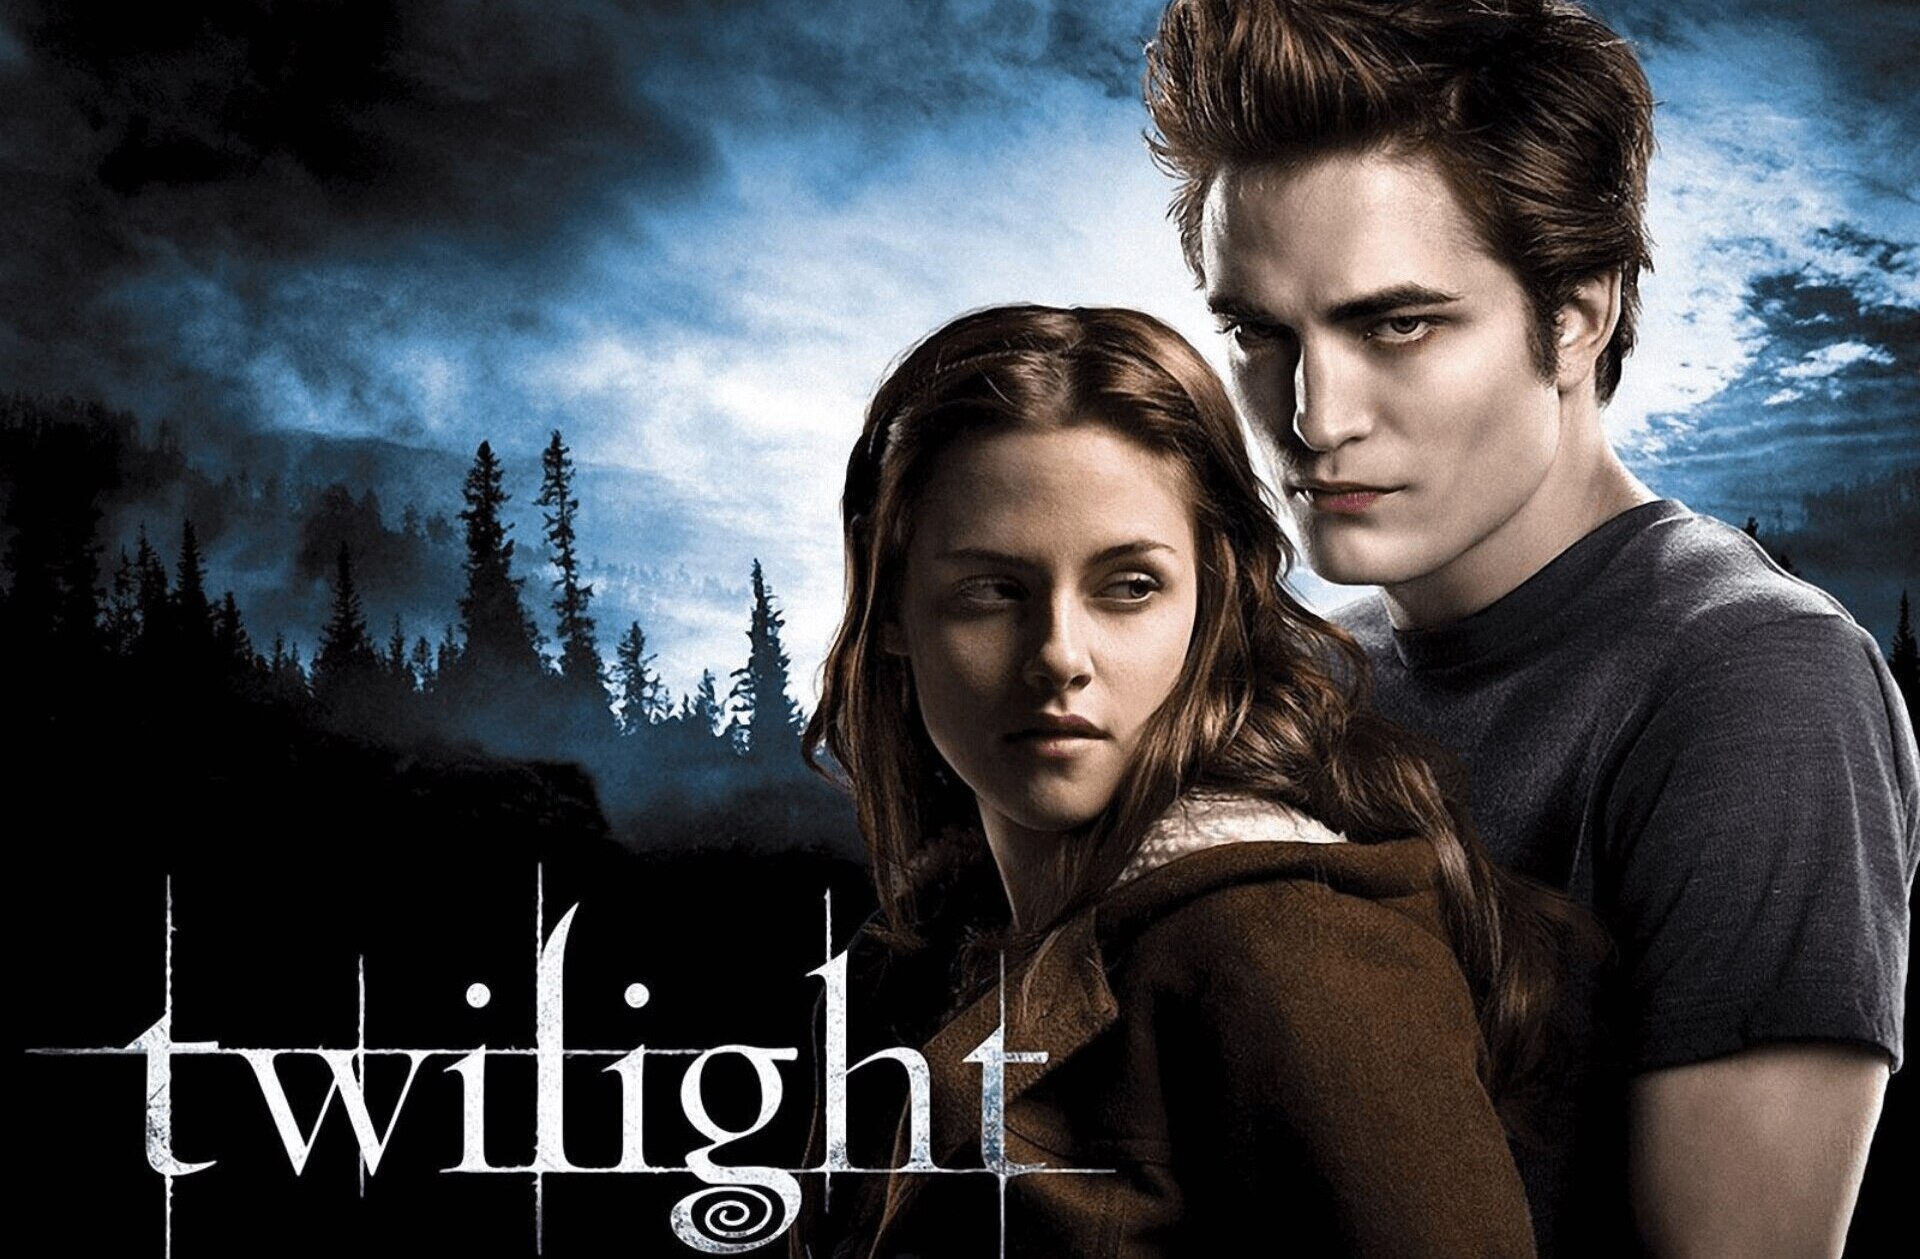 How To Watch Twilight